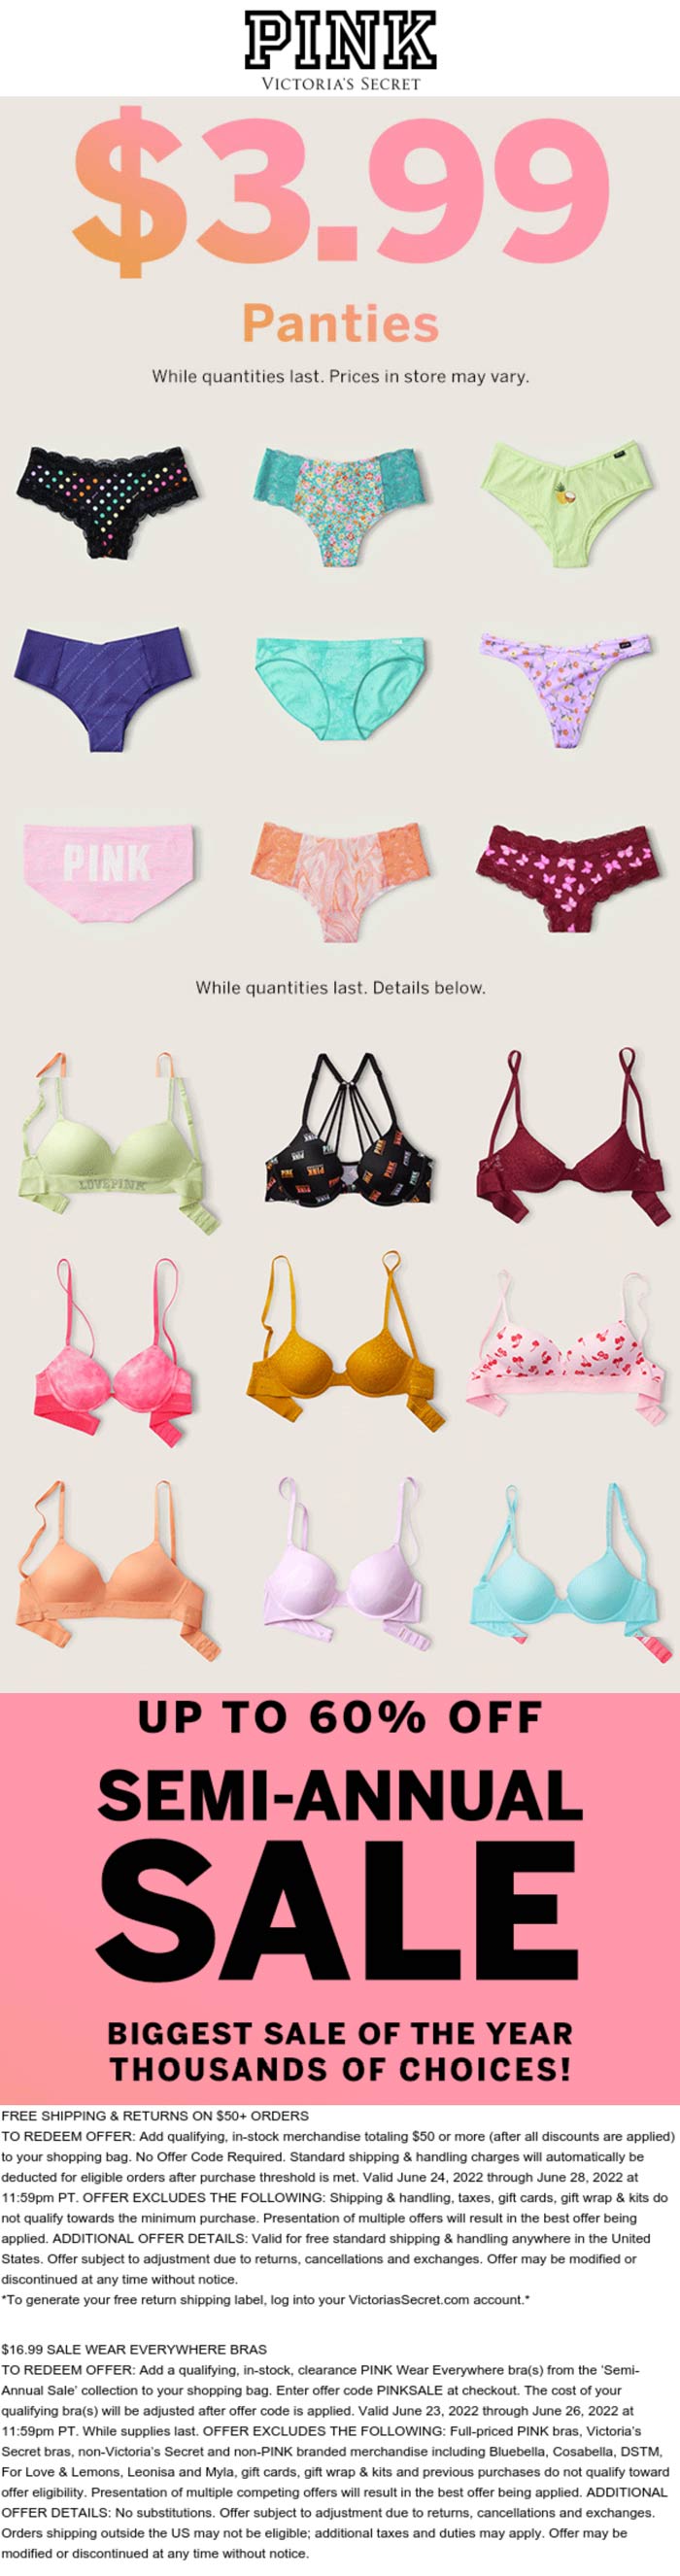 PINK stores Coupon  $4 panties & $17 bras at Victorias Secret PINK #pink 